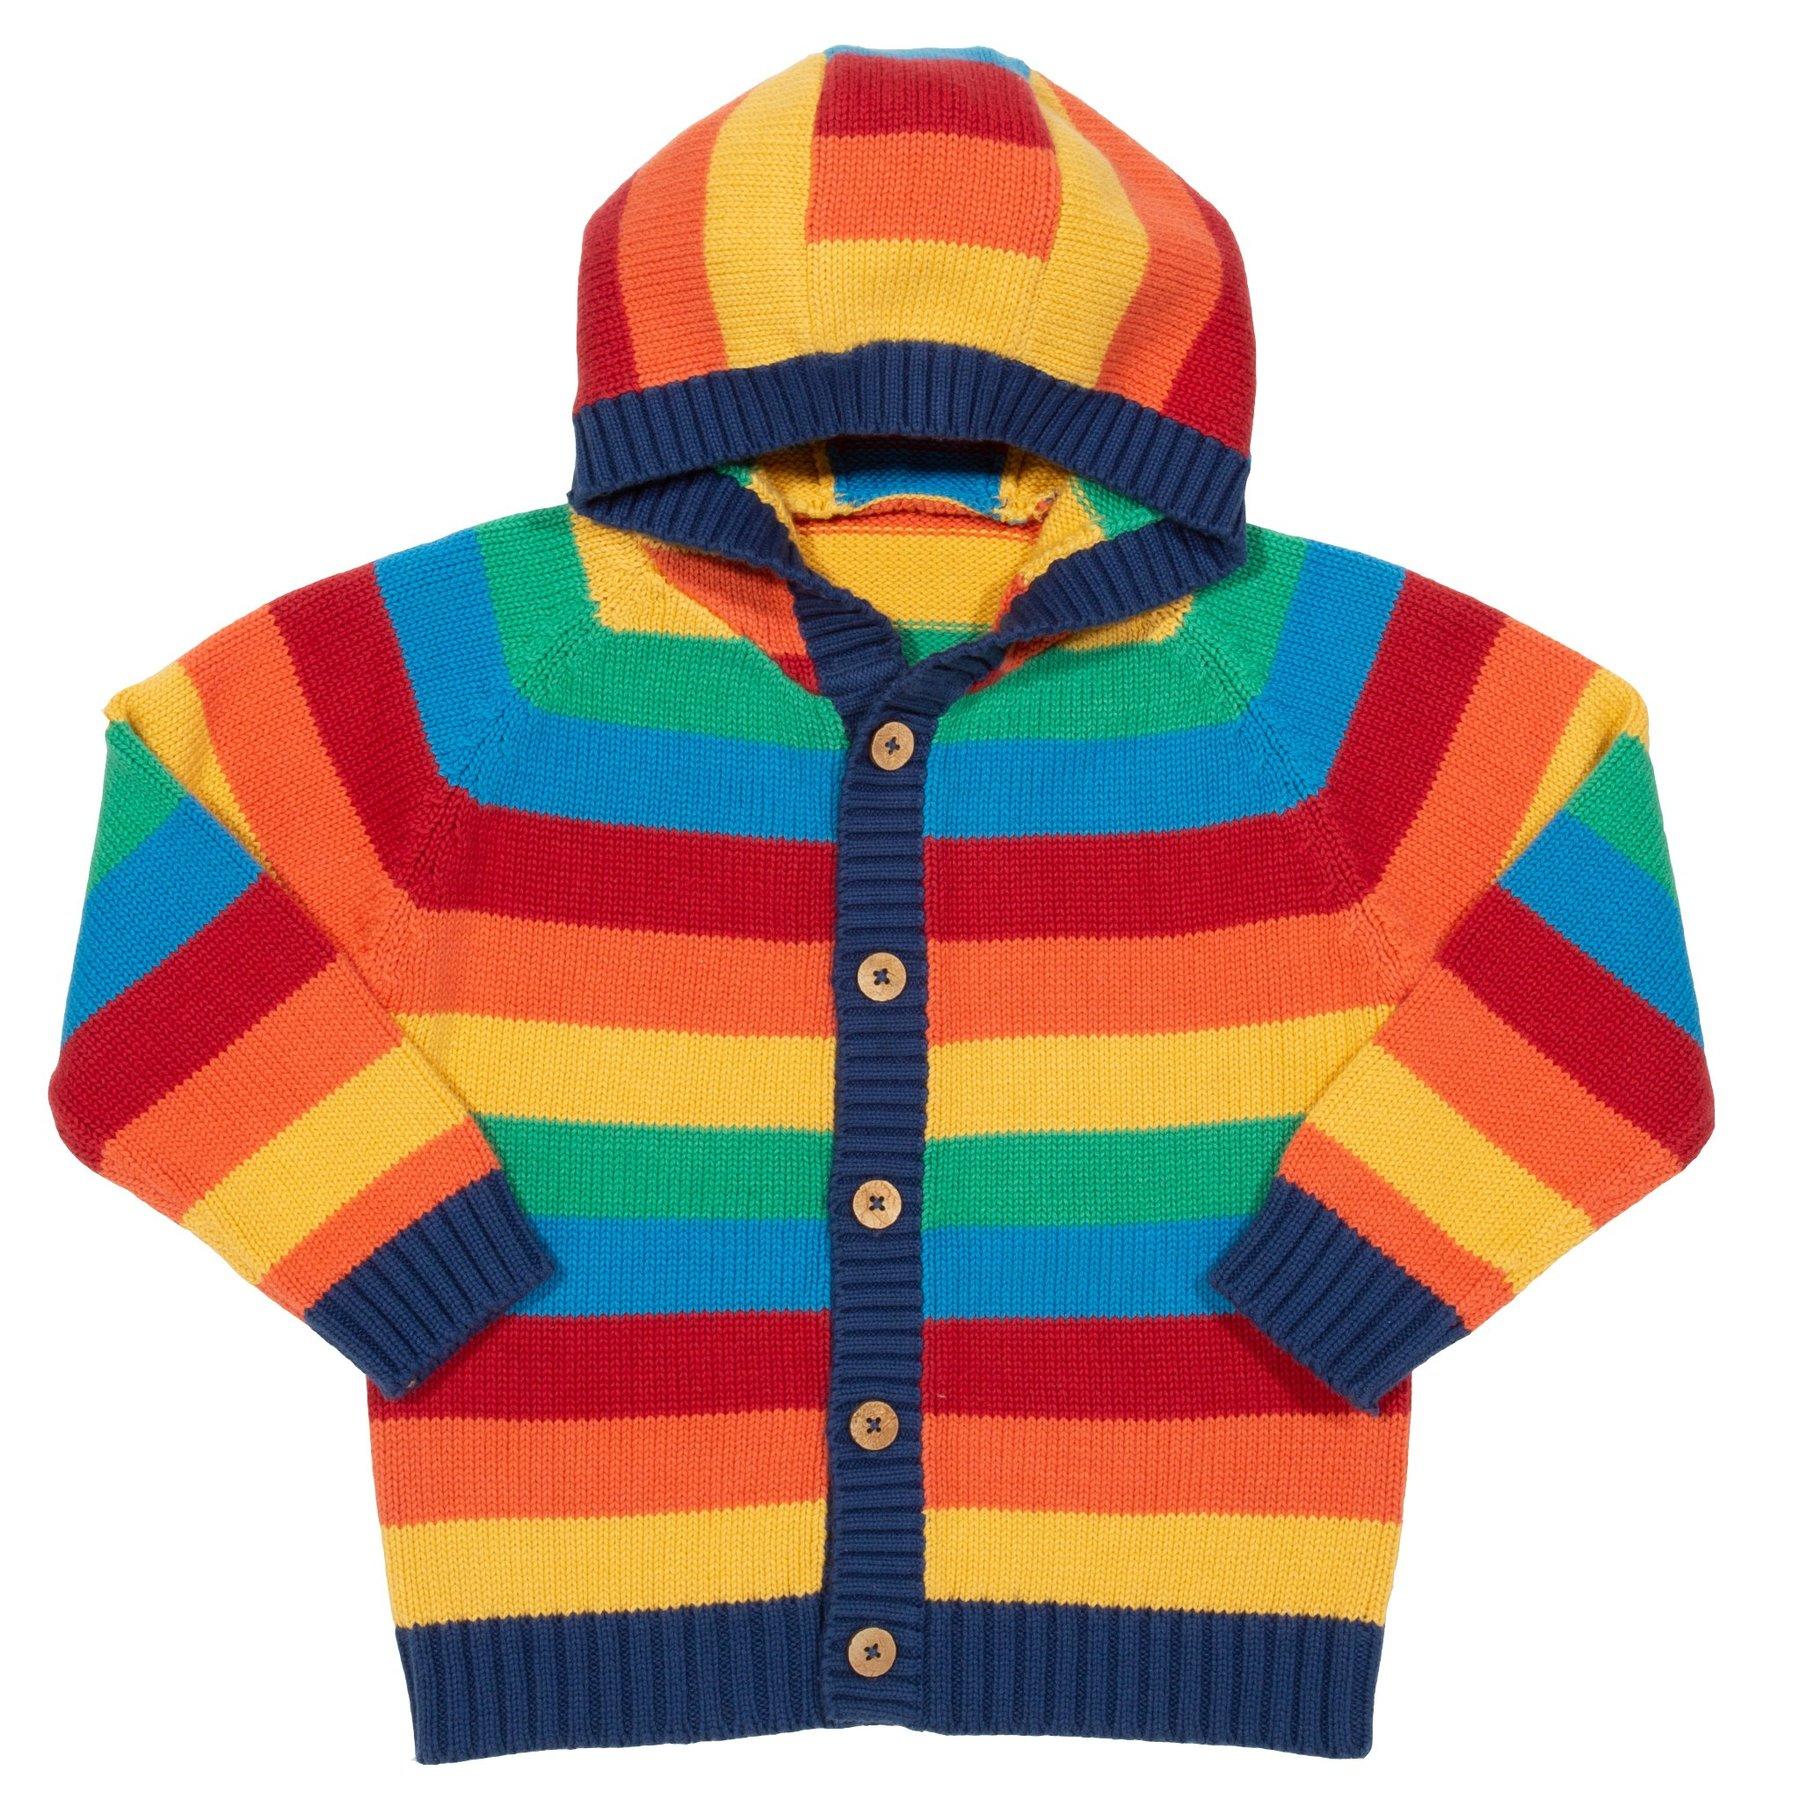 Kite Clothing Rainbow Knit Hoody front